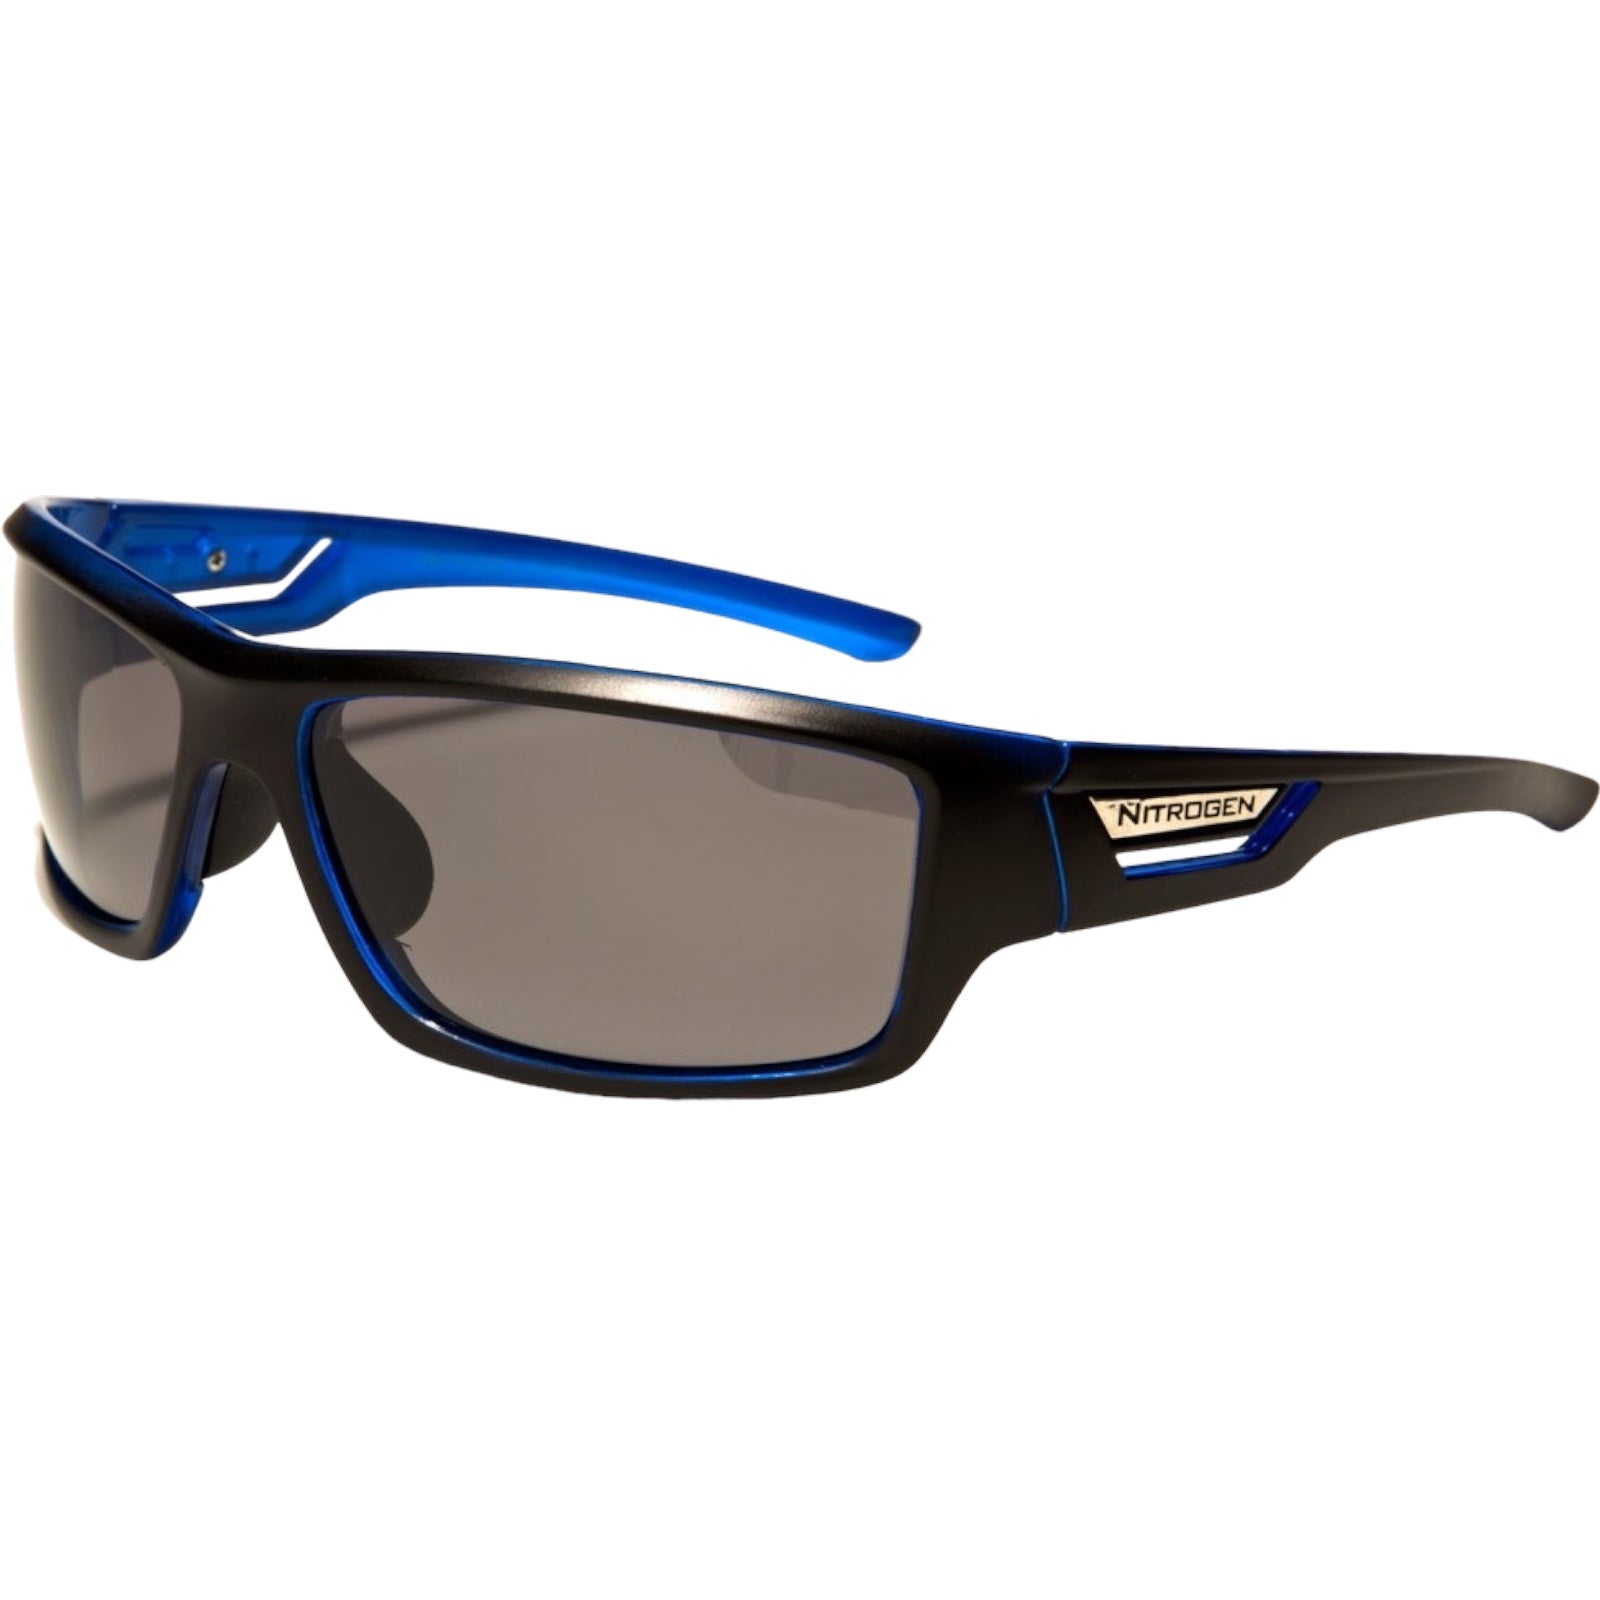 Nitrogen Polarised Large Sports Fishing Sunglasses Great For Driving Black/Blue/Smoke Lens